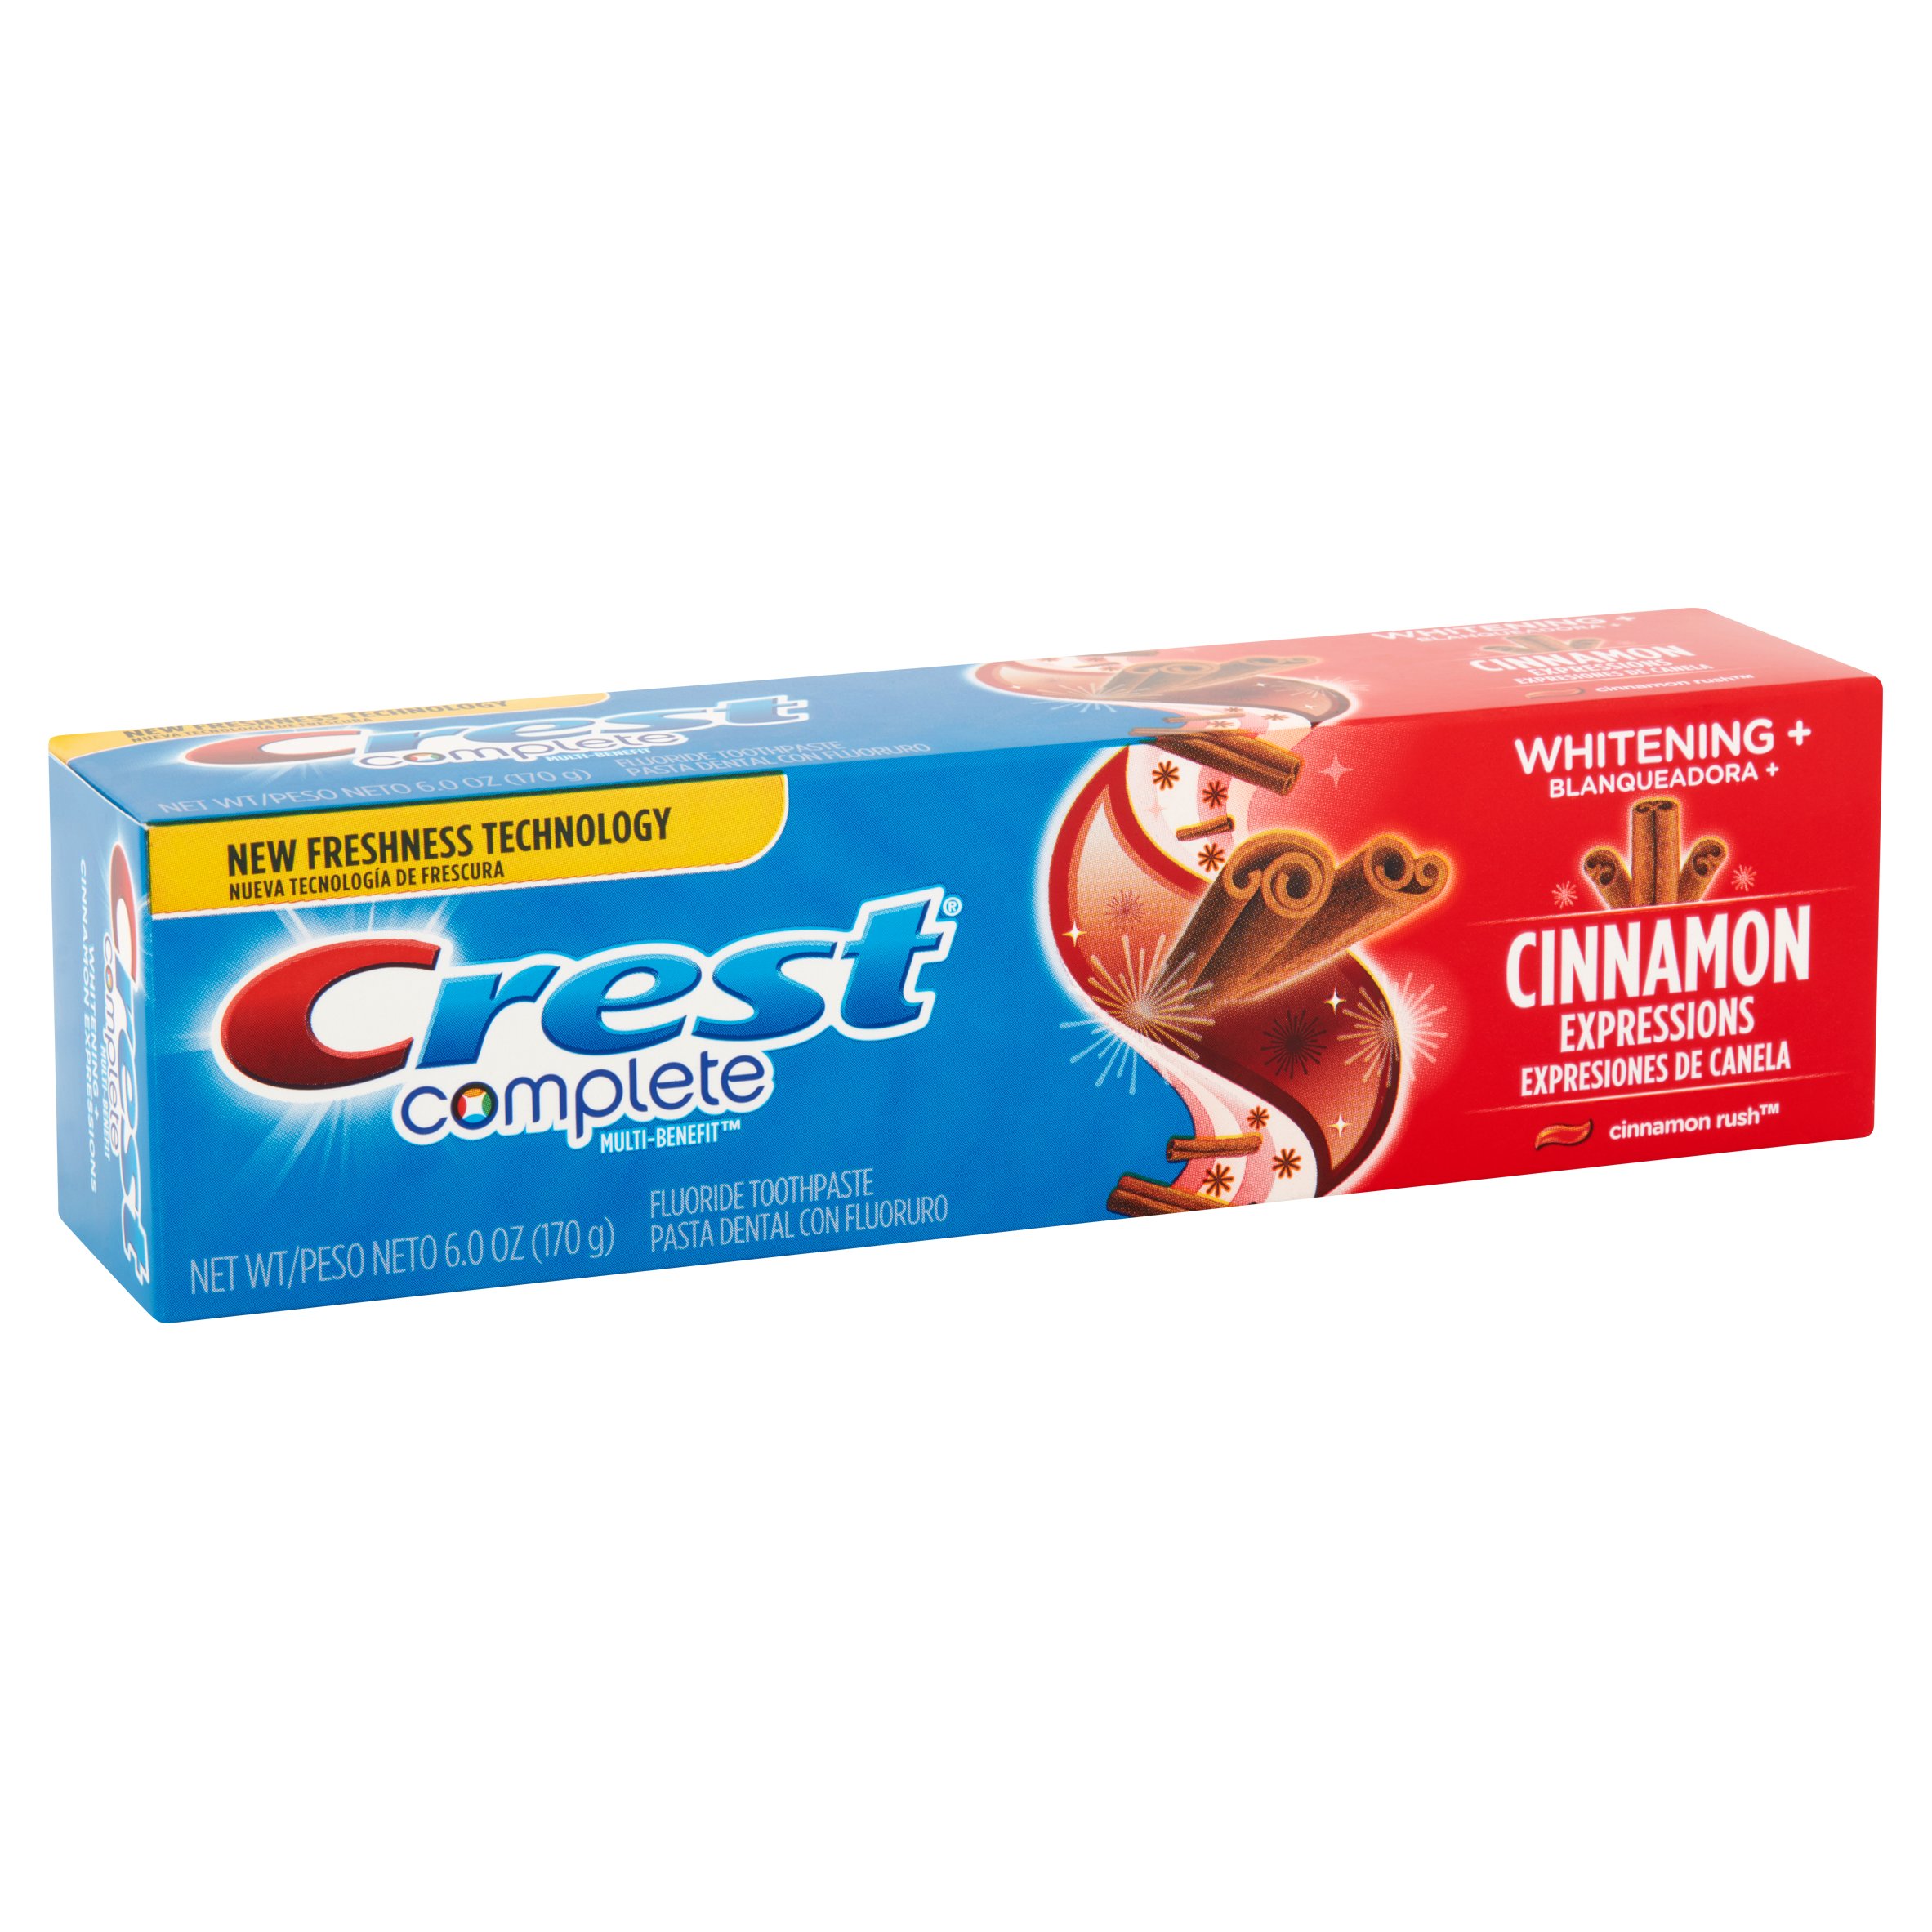 Crest Plus Complete Whitening Fluoride Toothpaste, Cinnamon, 6.0 oz - image 2 of 4